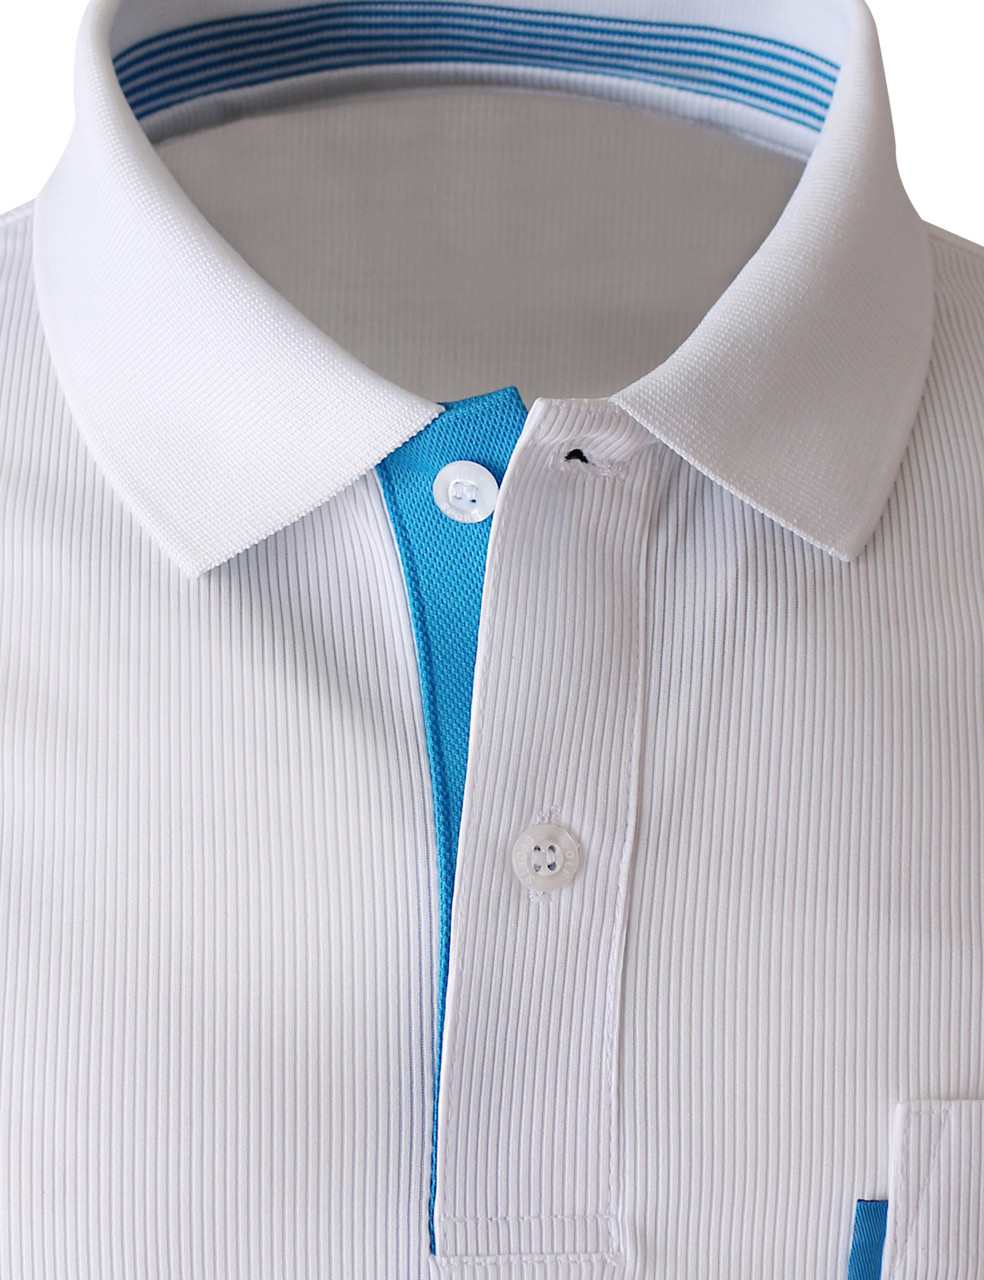 Coolon polo shirt short sleeves-5 colors-Unisex